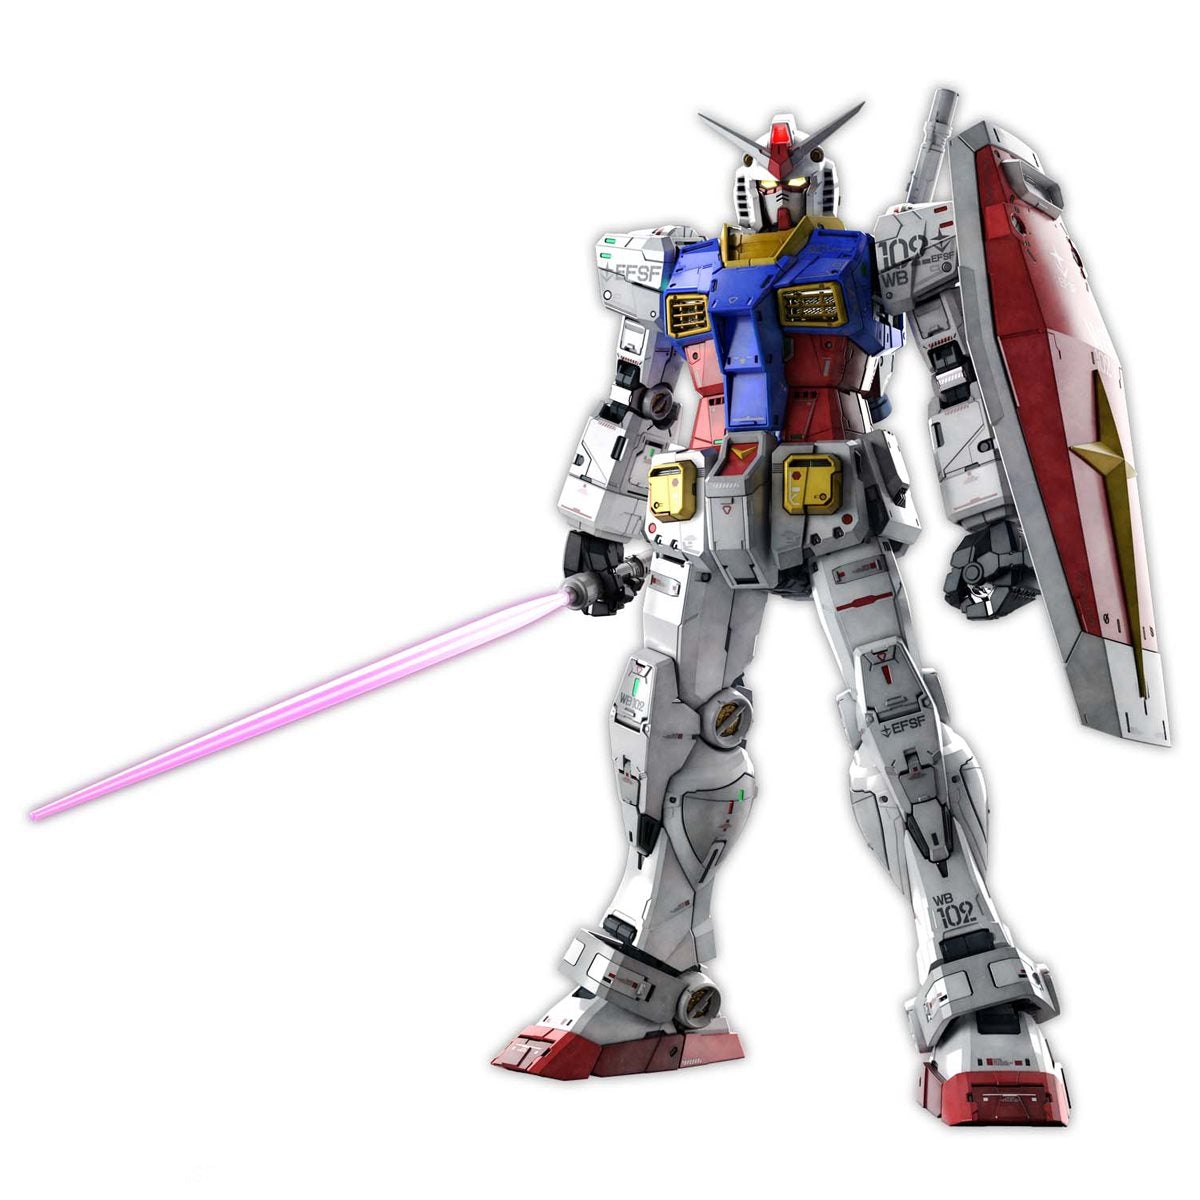 Mobile Suit Gundam RX-78-2 Gundam PG Unleashed 1:60 Scale 